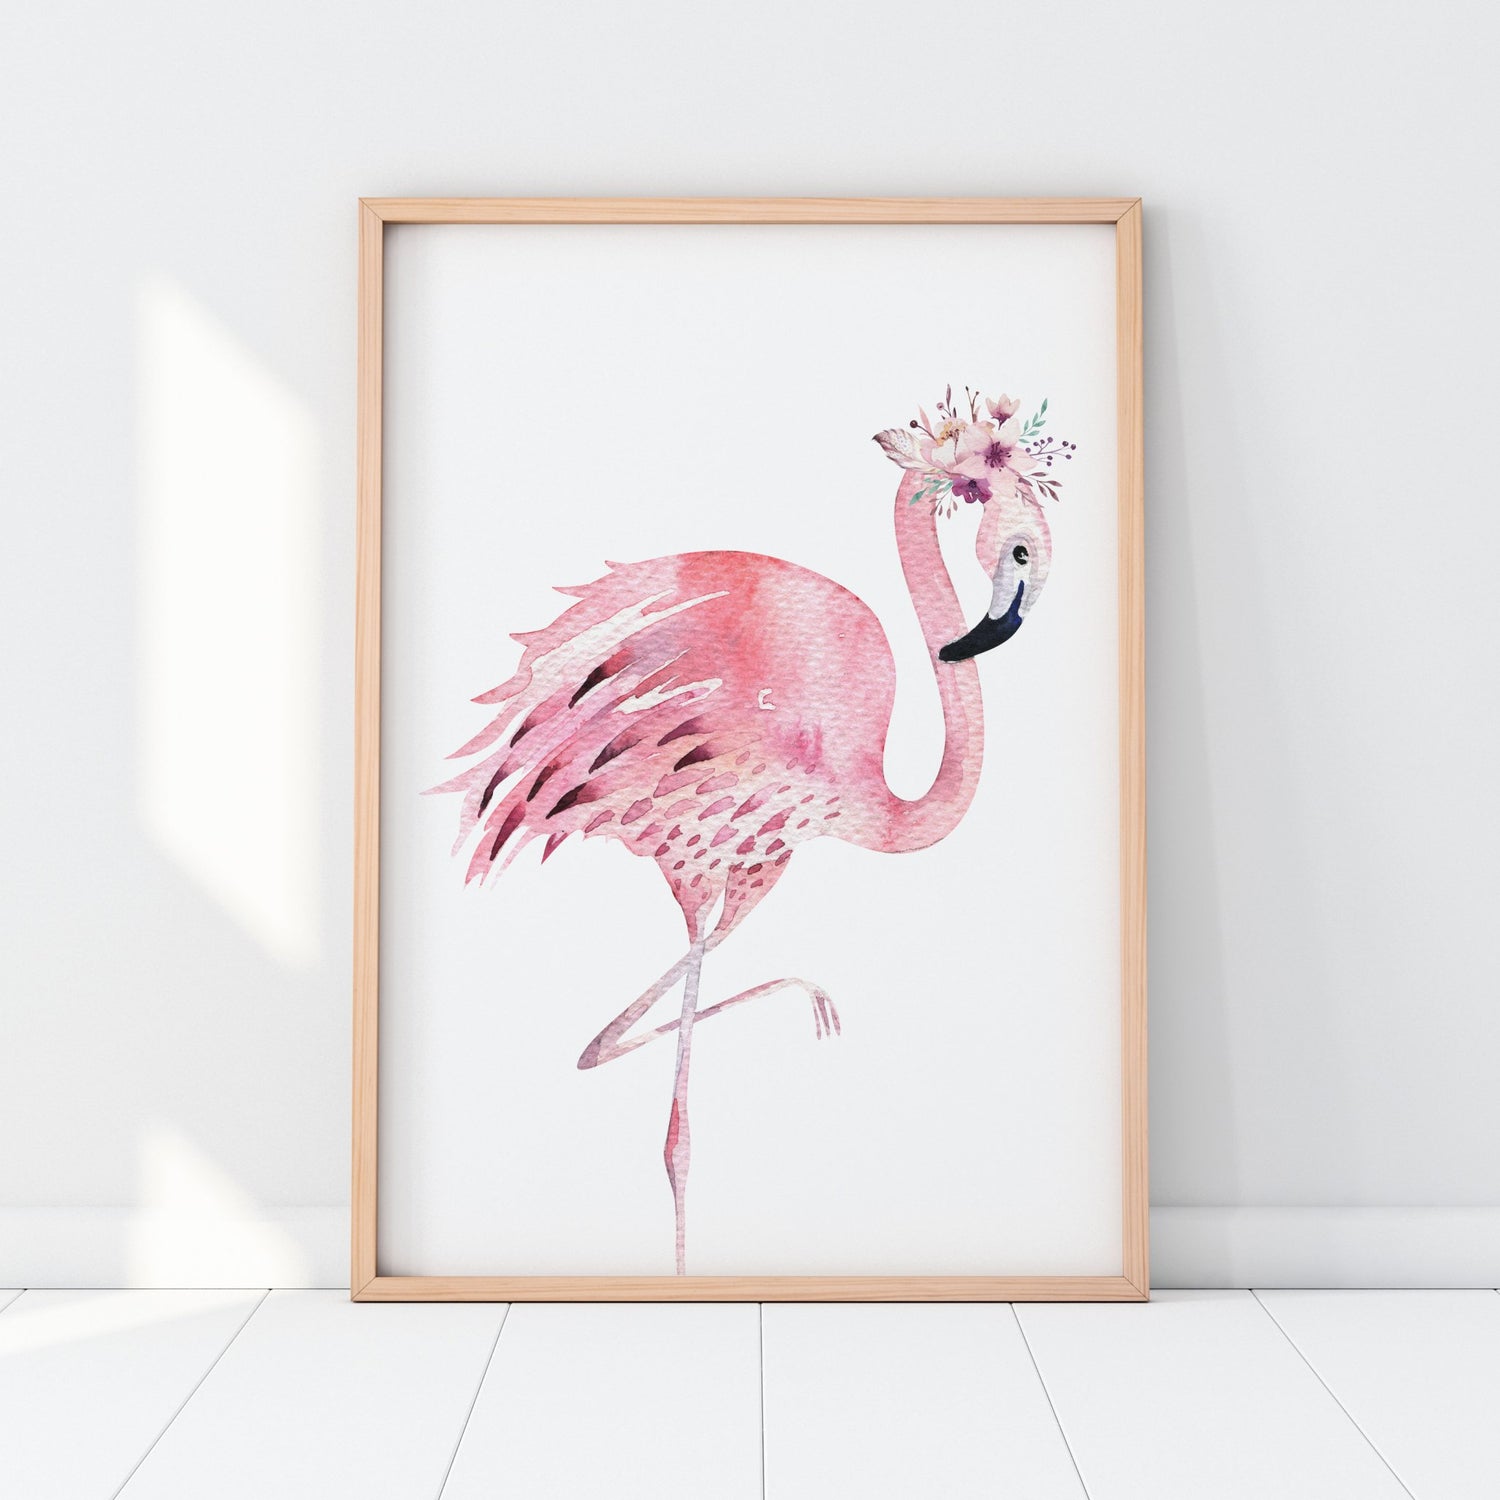 Flamingos & Sweet Dreams Prints